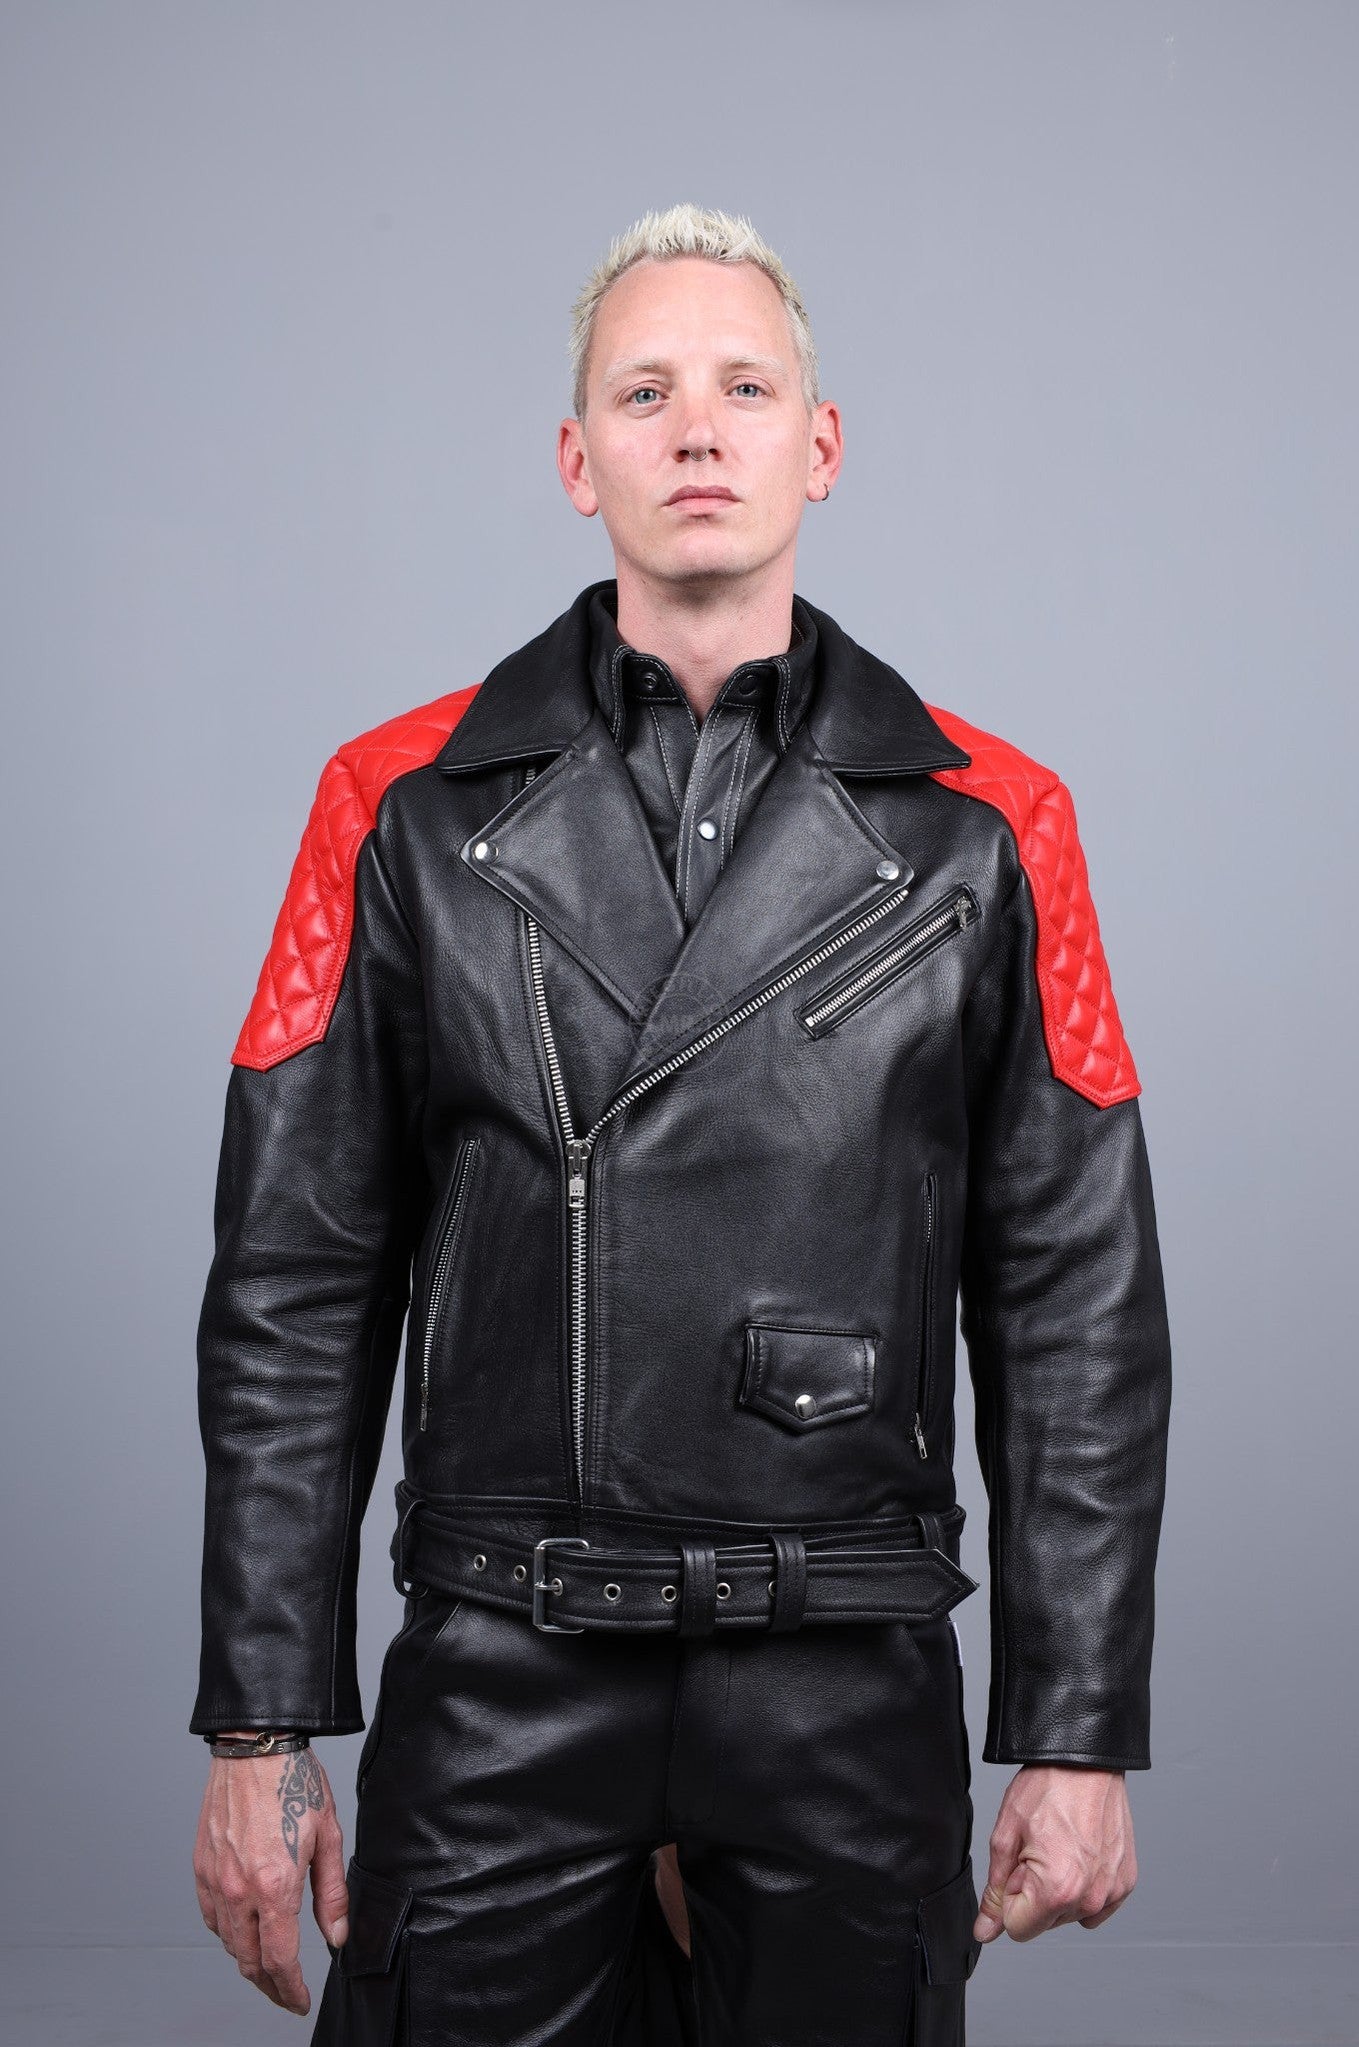 Leather Brando Jacket - Red Padding at MR. Riegillio